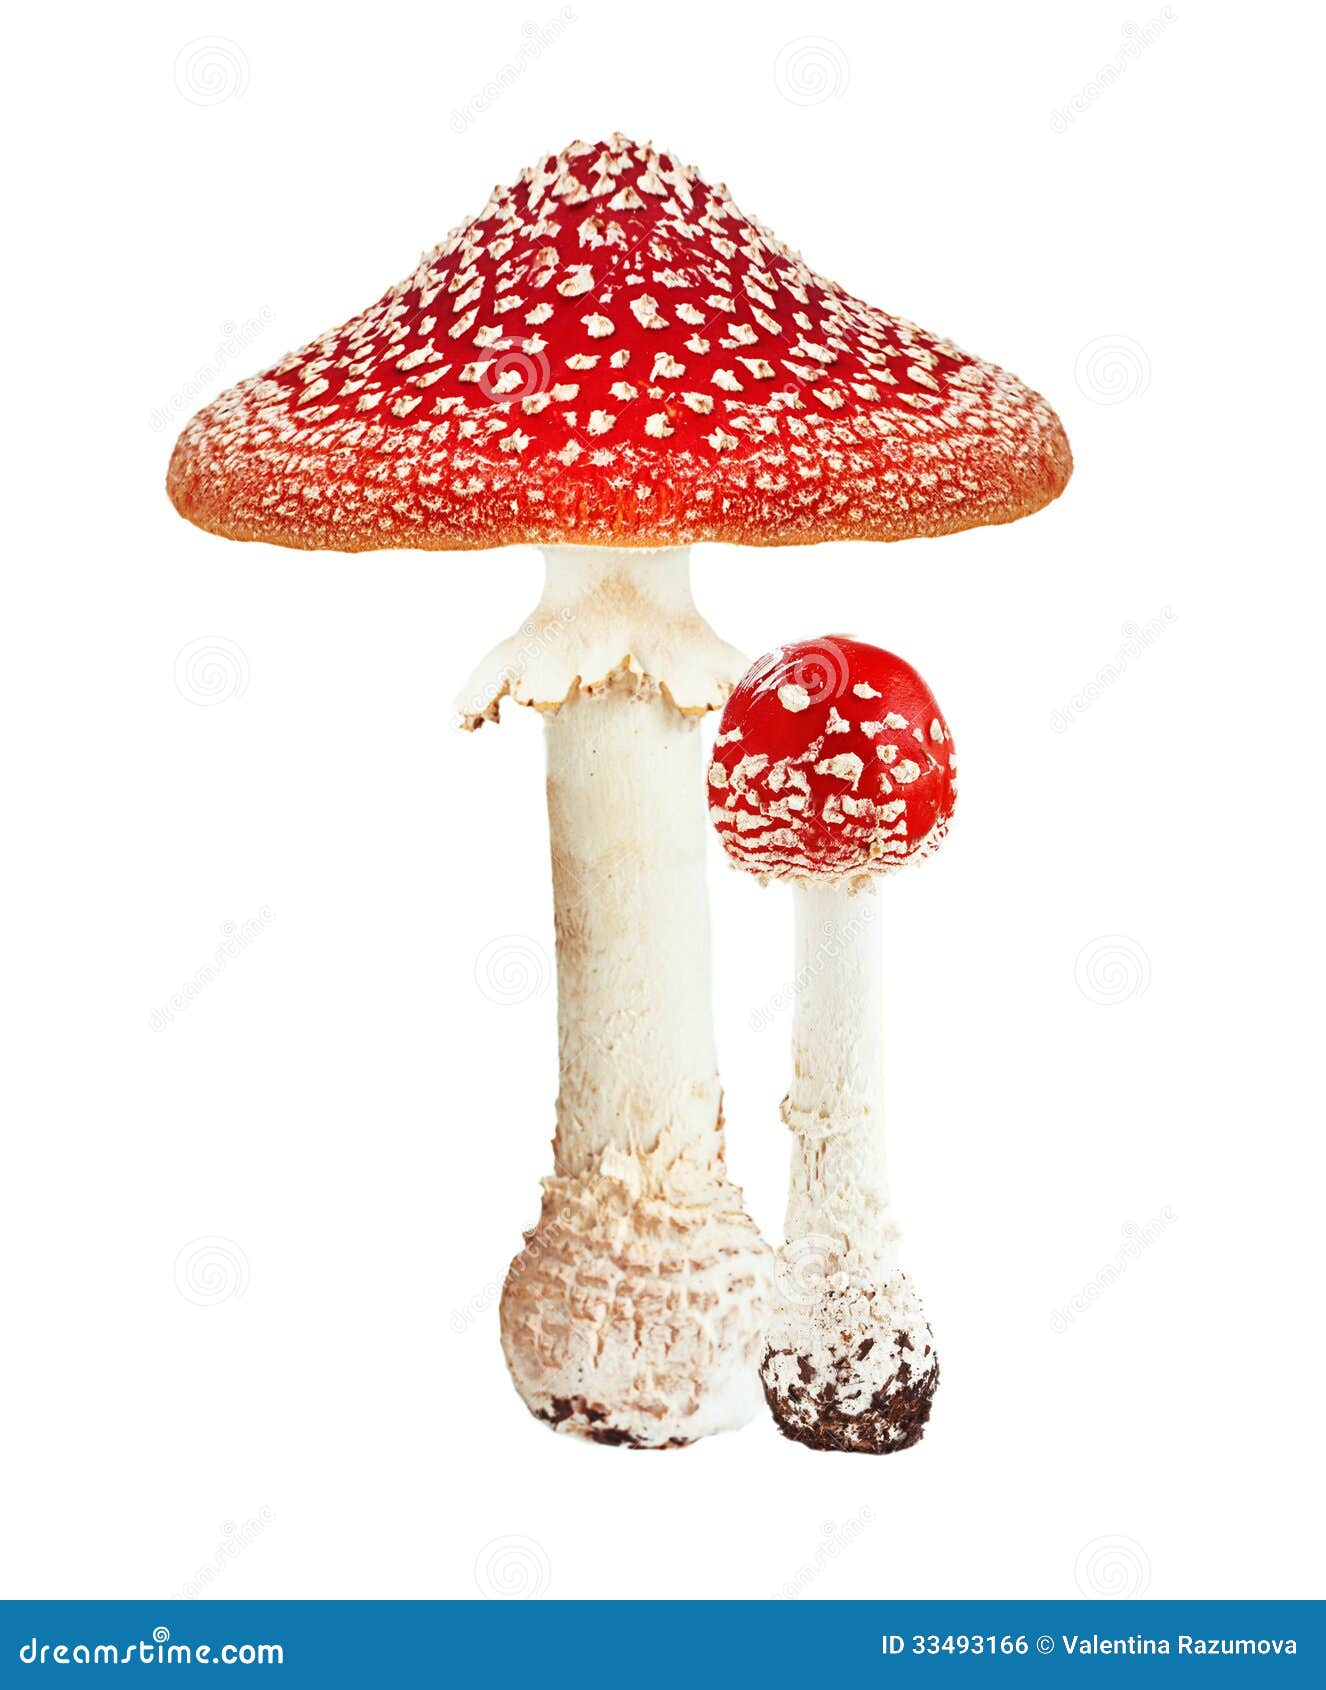 red poison mushroom amanita